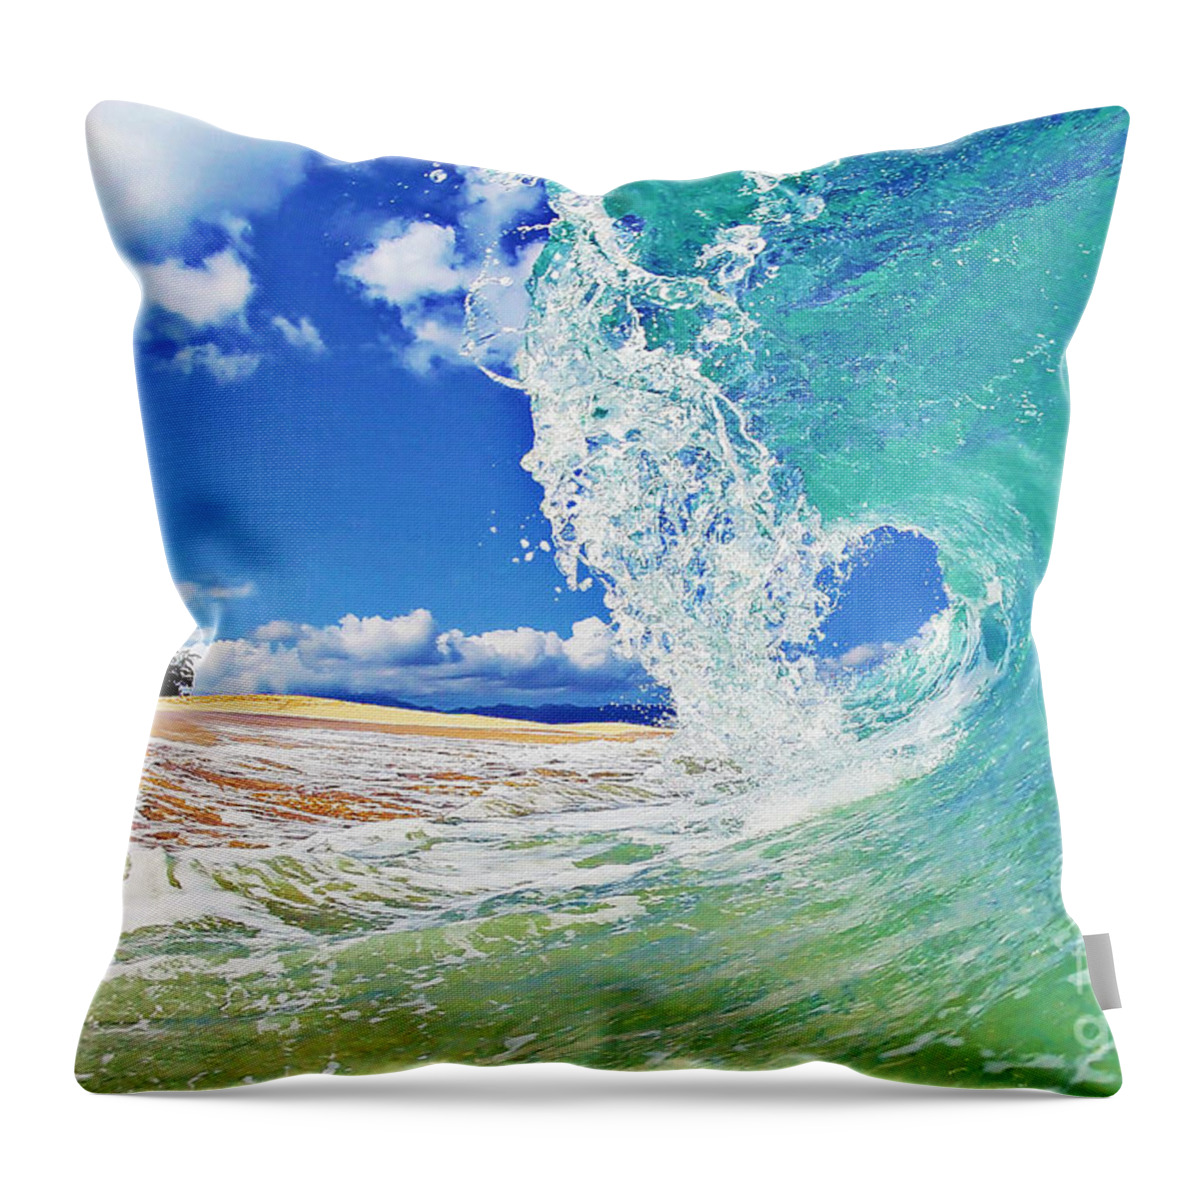 Ocean Throw Pillow featuring the photograph Keiki Beach Wave by Paul Topp